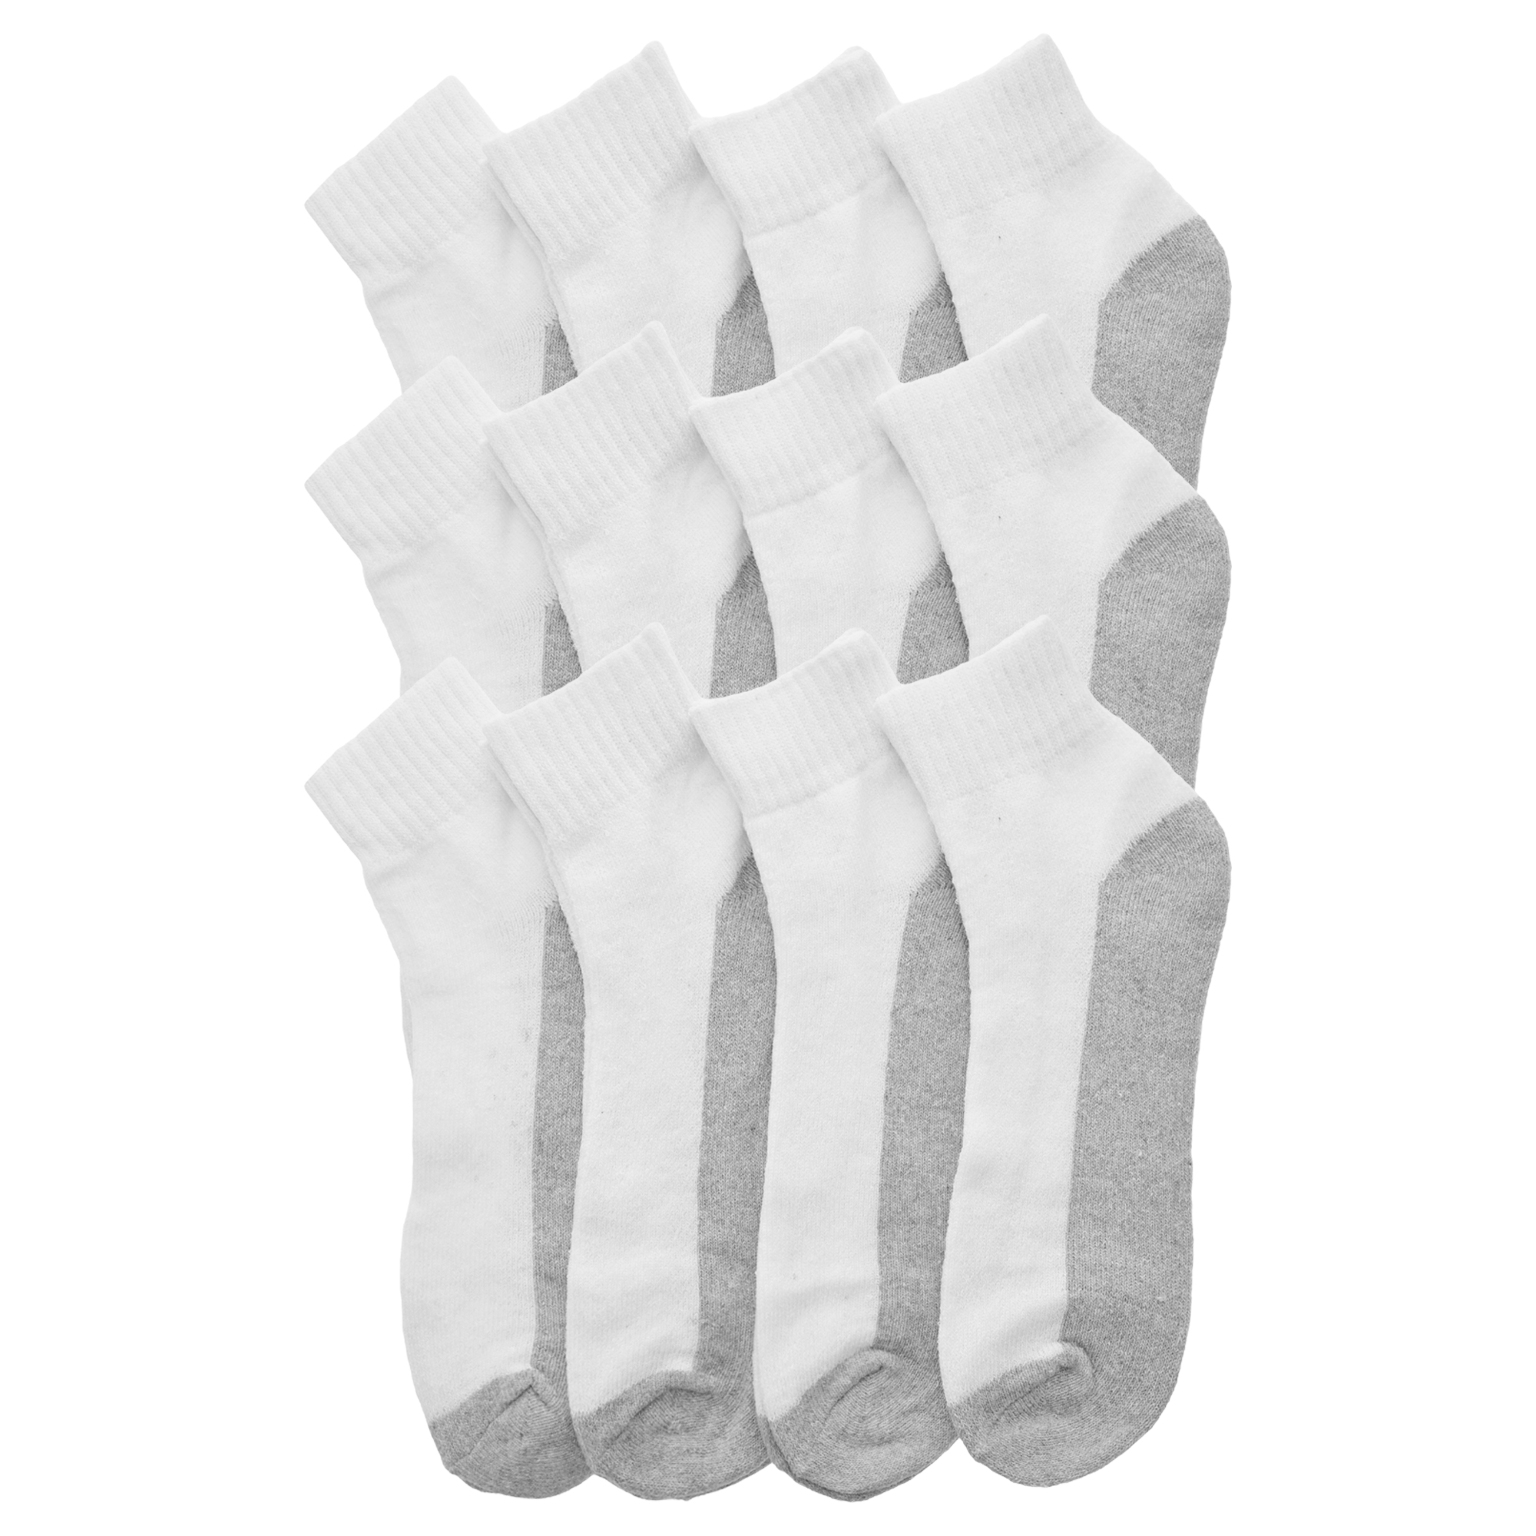 Unisex Gray / White Cotton Blend Quarter Socks - Size L / X(240x$0.64)